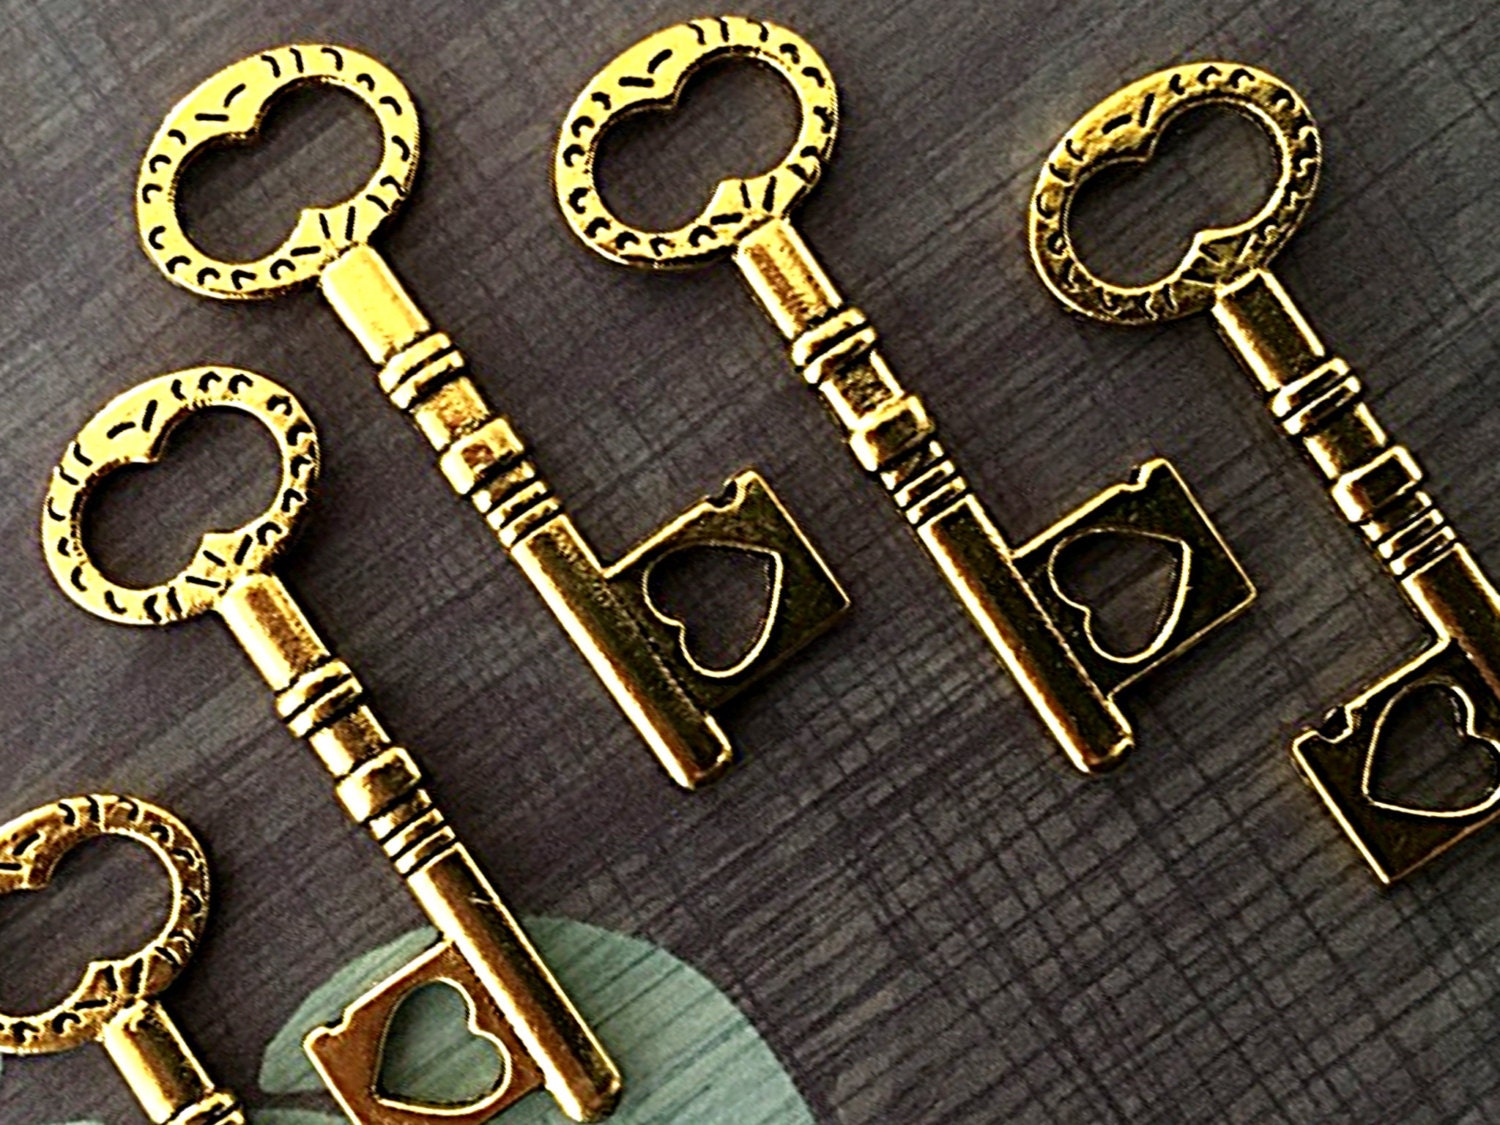 60 Key Charms Skeleton Keys Craft Supply Steampunk Scrapbook Door Gate Key NP49 